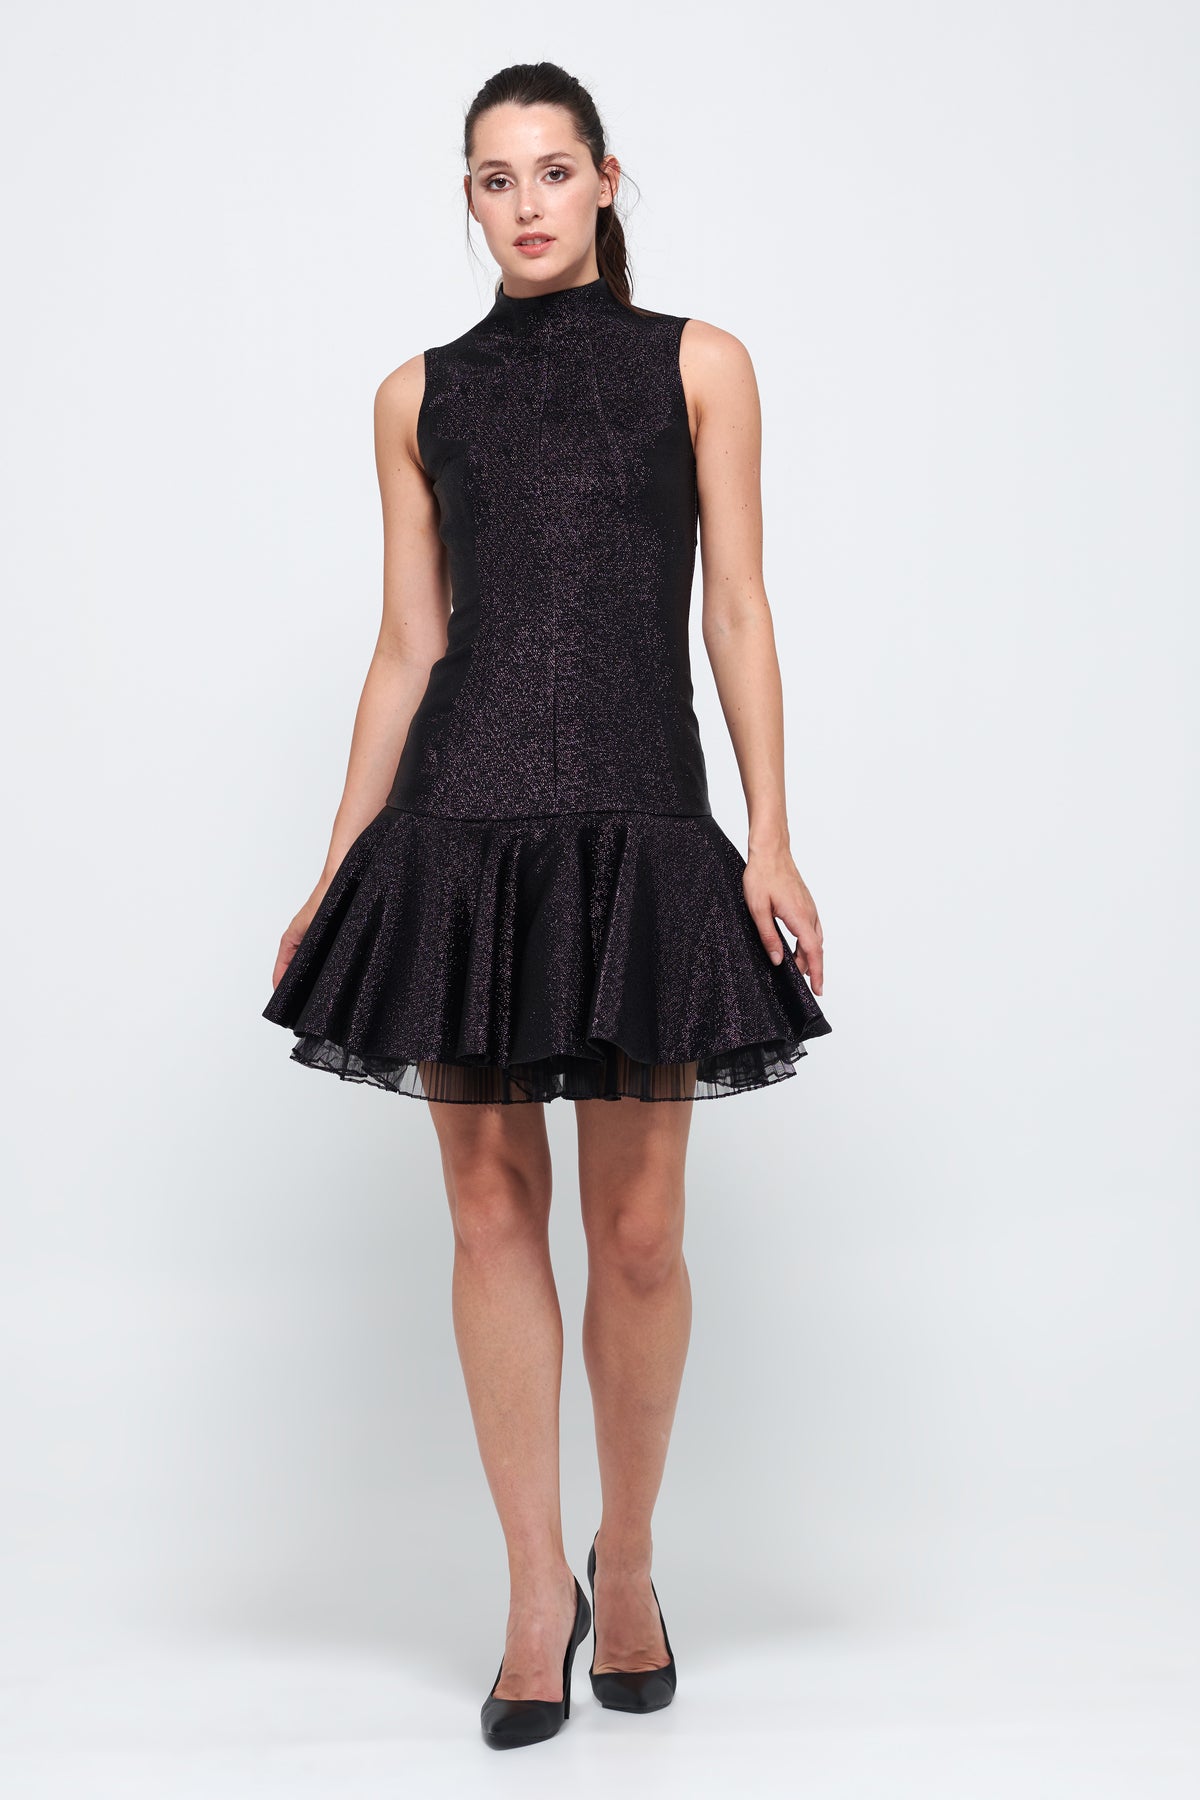 Stand Color Ruffle Detail Black Mini Dress